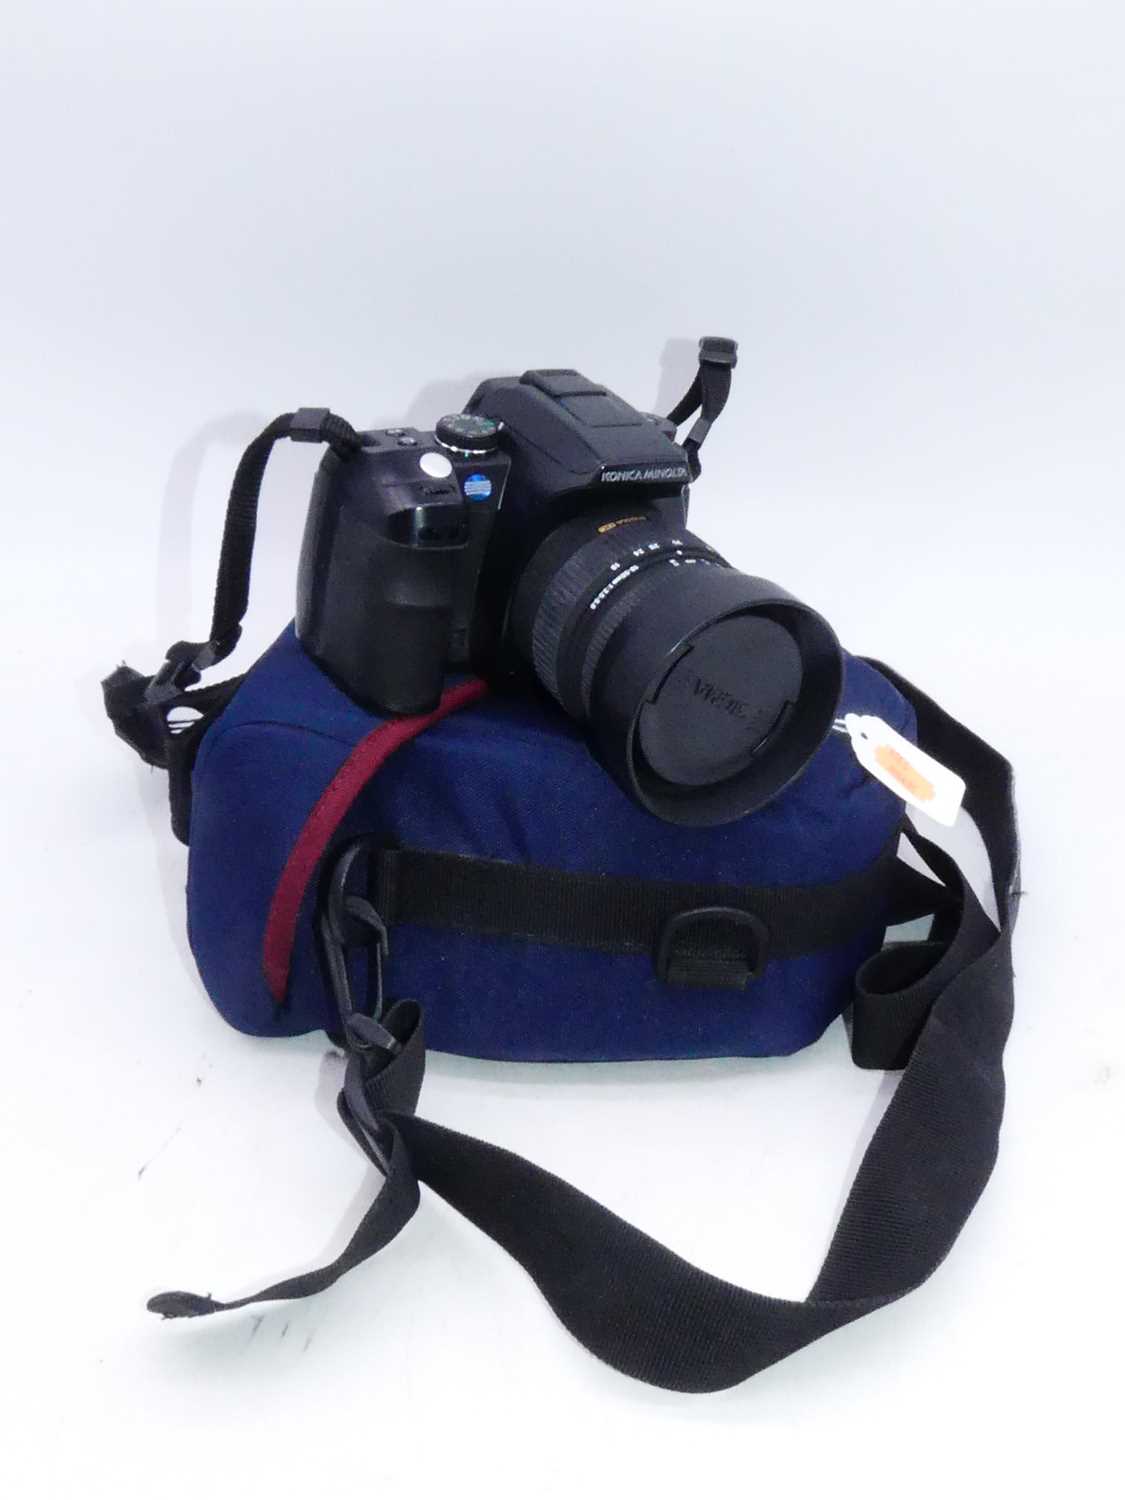 A Konica Minolta Dynax 5D digital SLR camera, with travel case